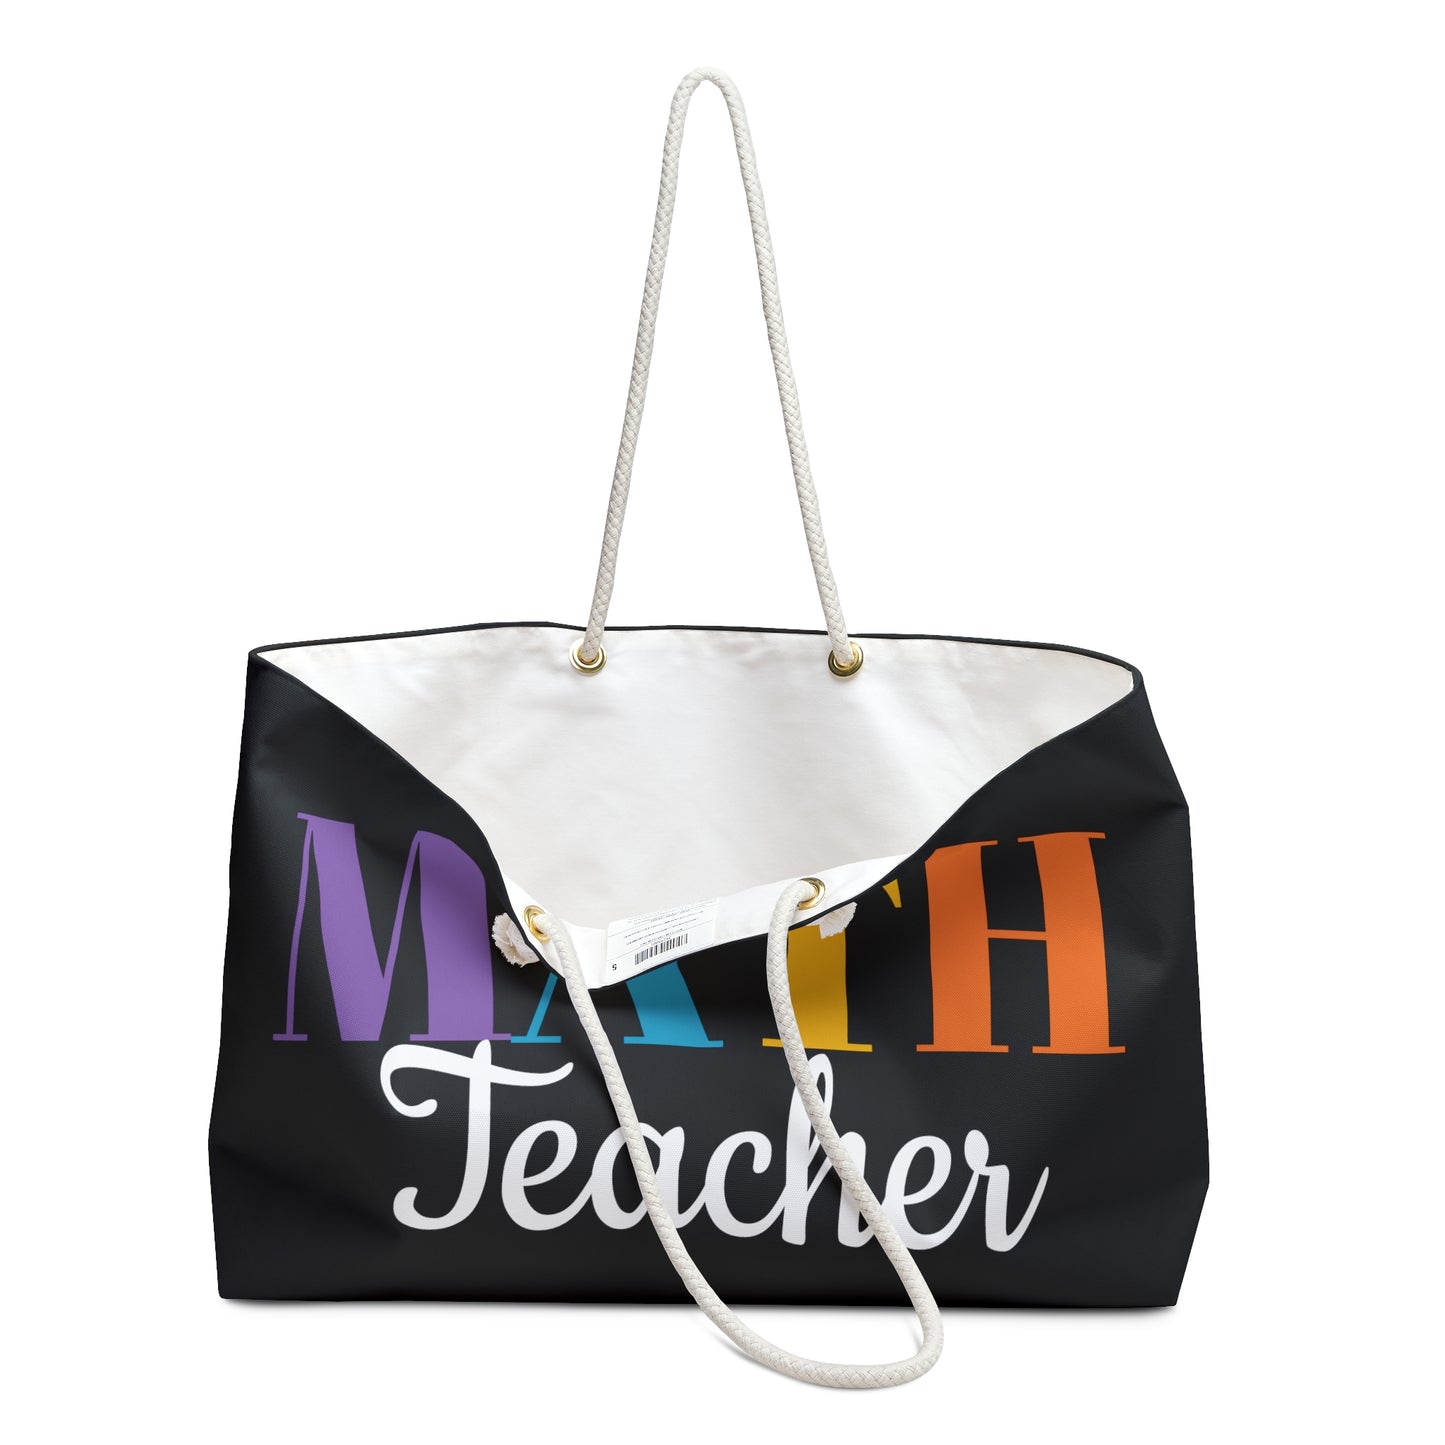 Educator (Math Dear Student/ Weekender Bag)